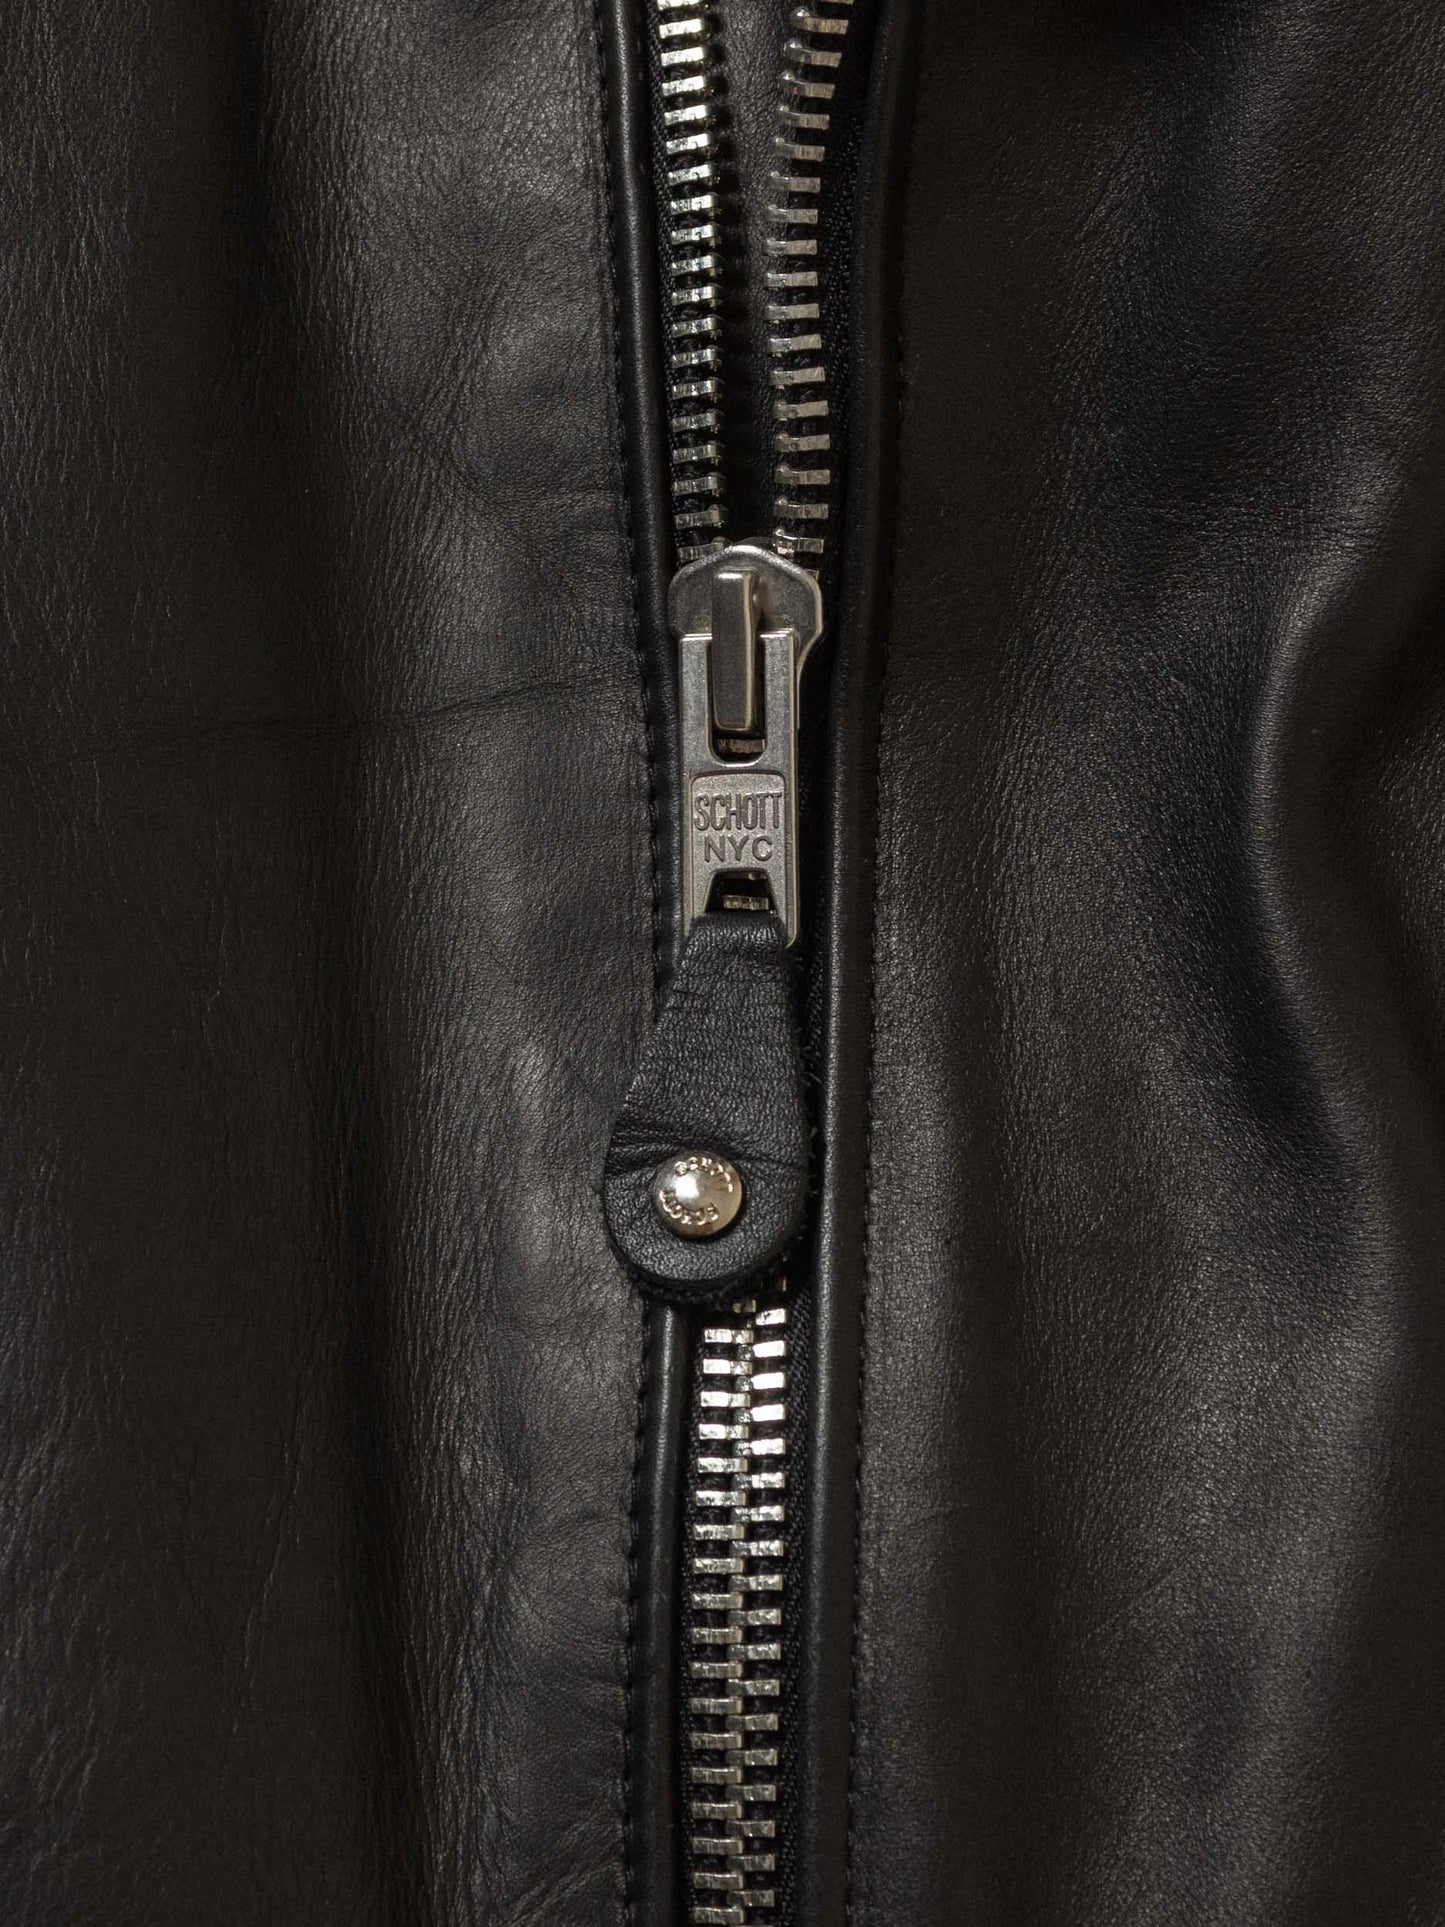 Schott NYC 118 Perfecto Leather Jacket